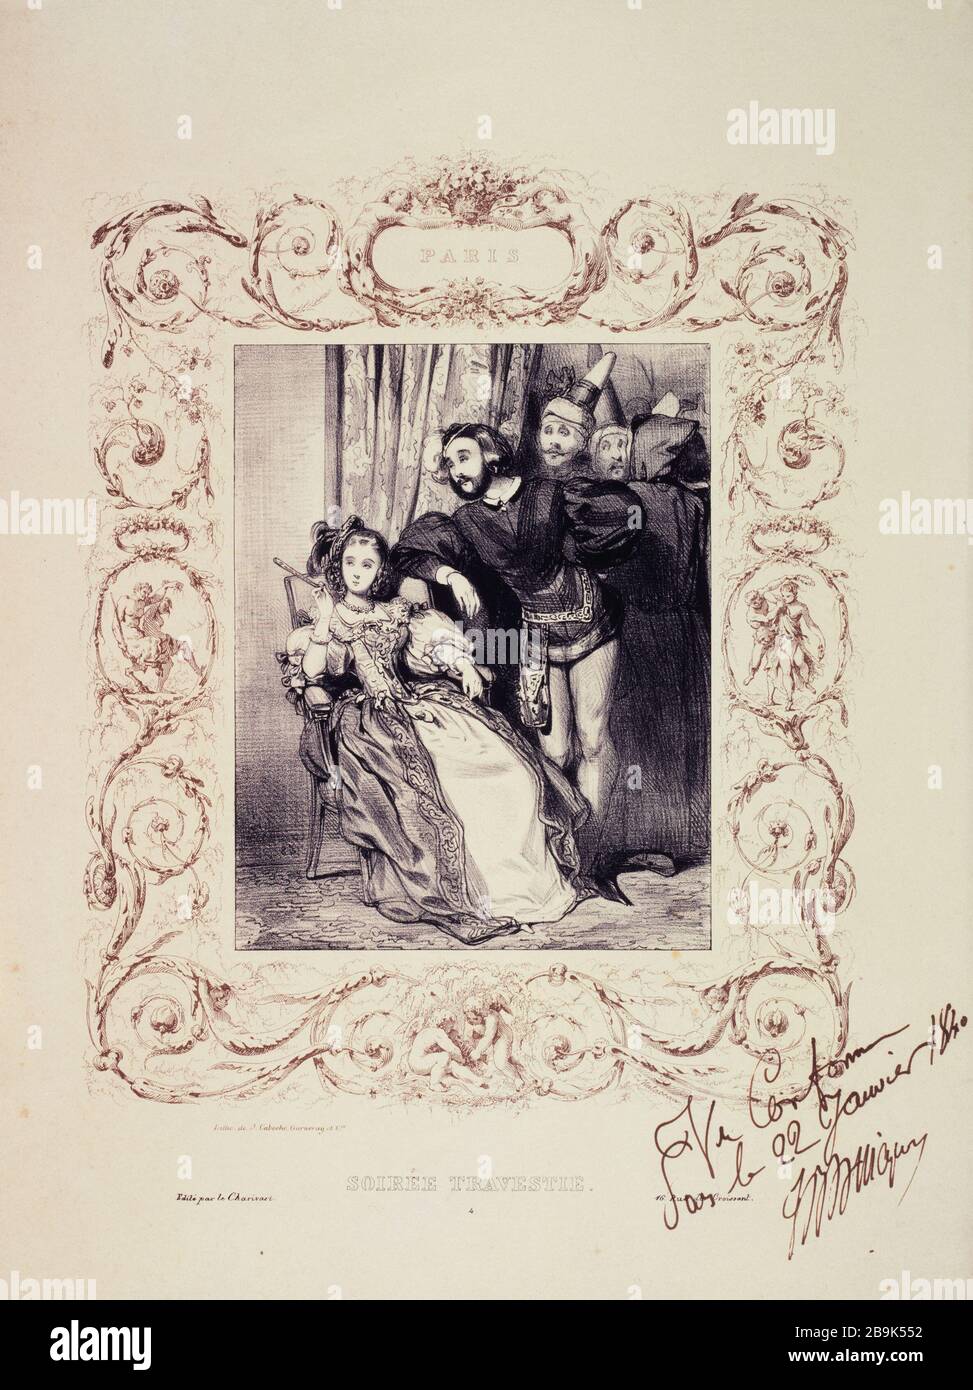 Paris - disguised evening Paul Gavarni (1804-1866). 'Paris - soirée travestie'. Gravure. Paris, musée Carnavalet. Stock Photo